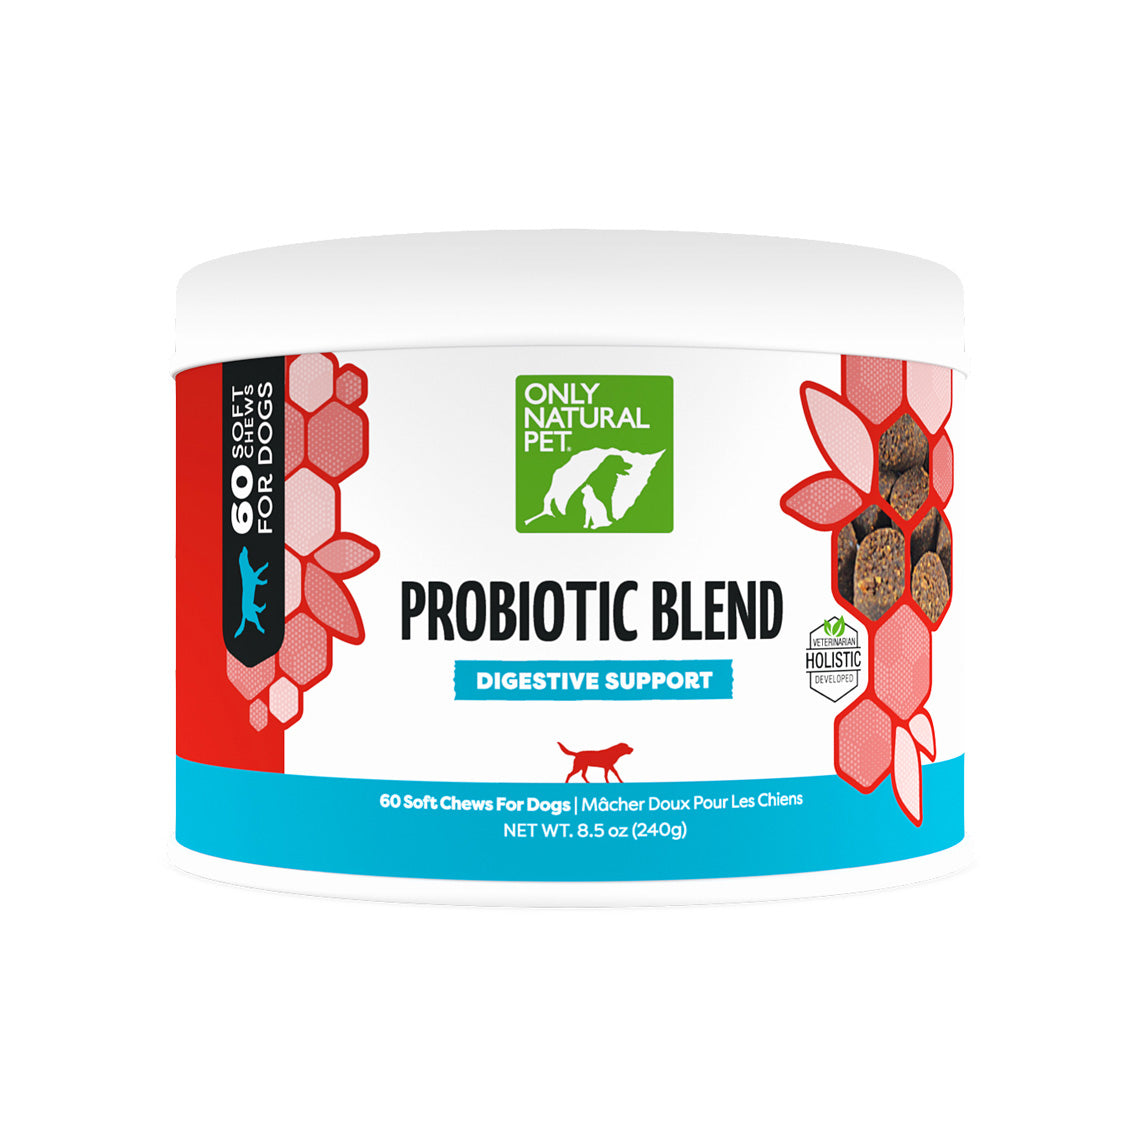 Probiotic Blend Natural Probiotics Only Pet